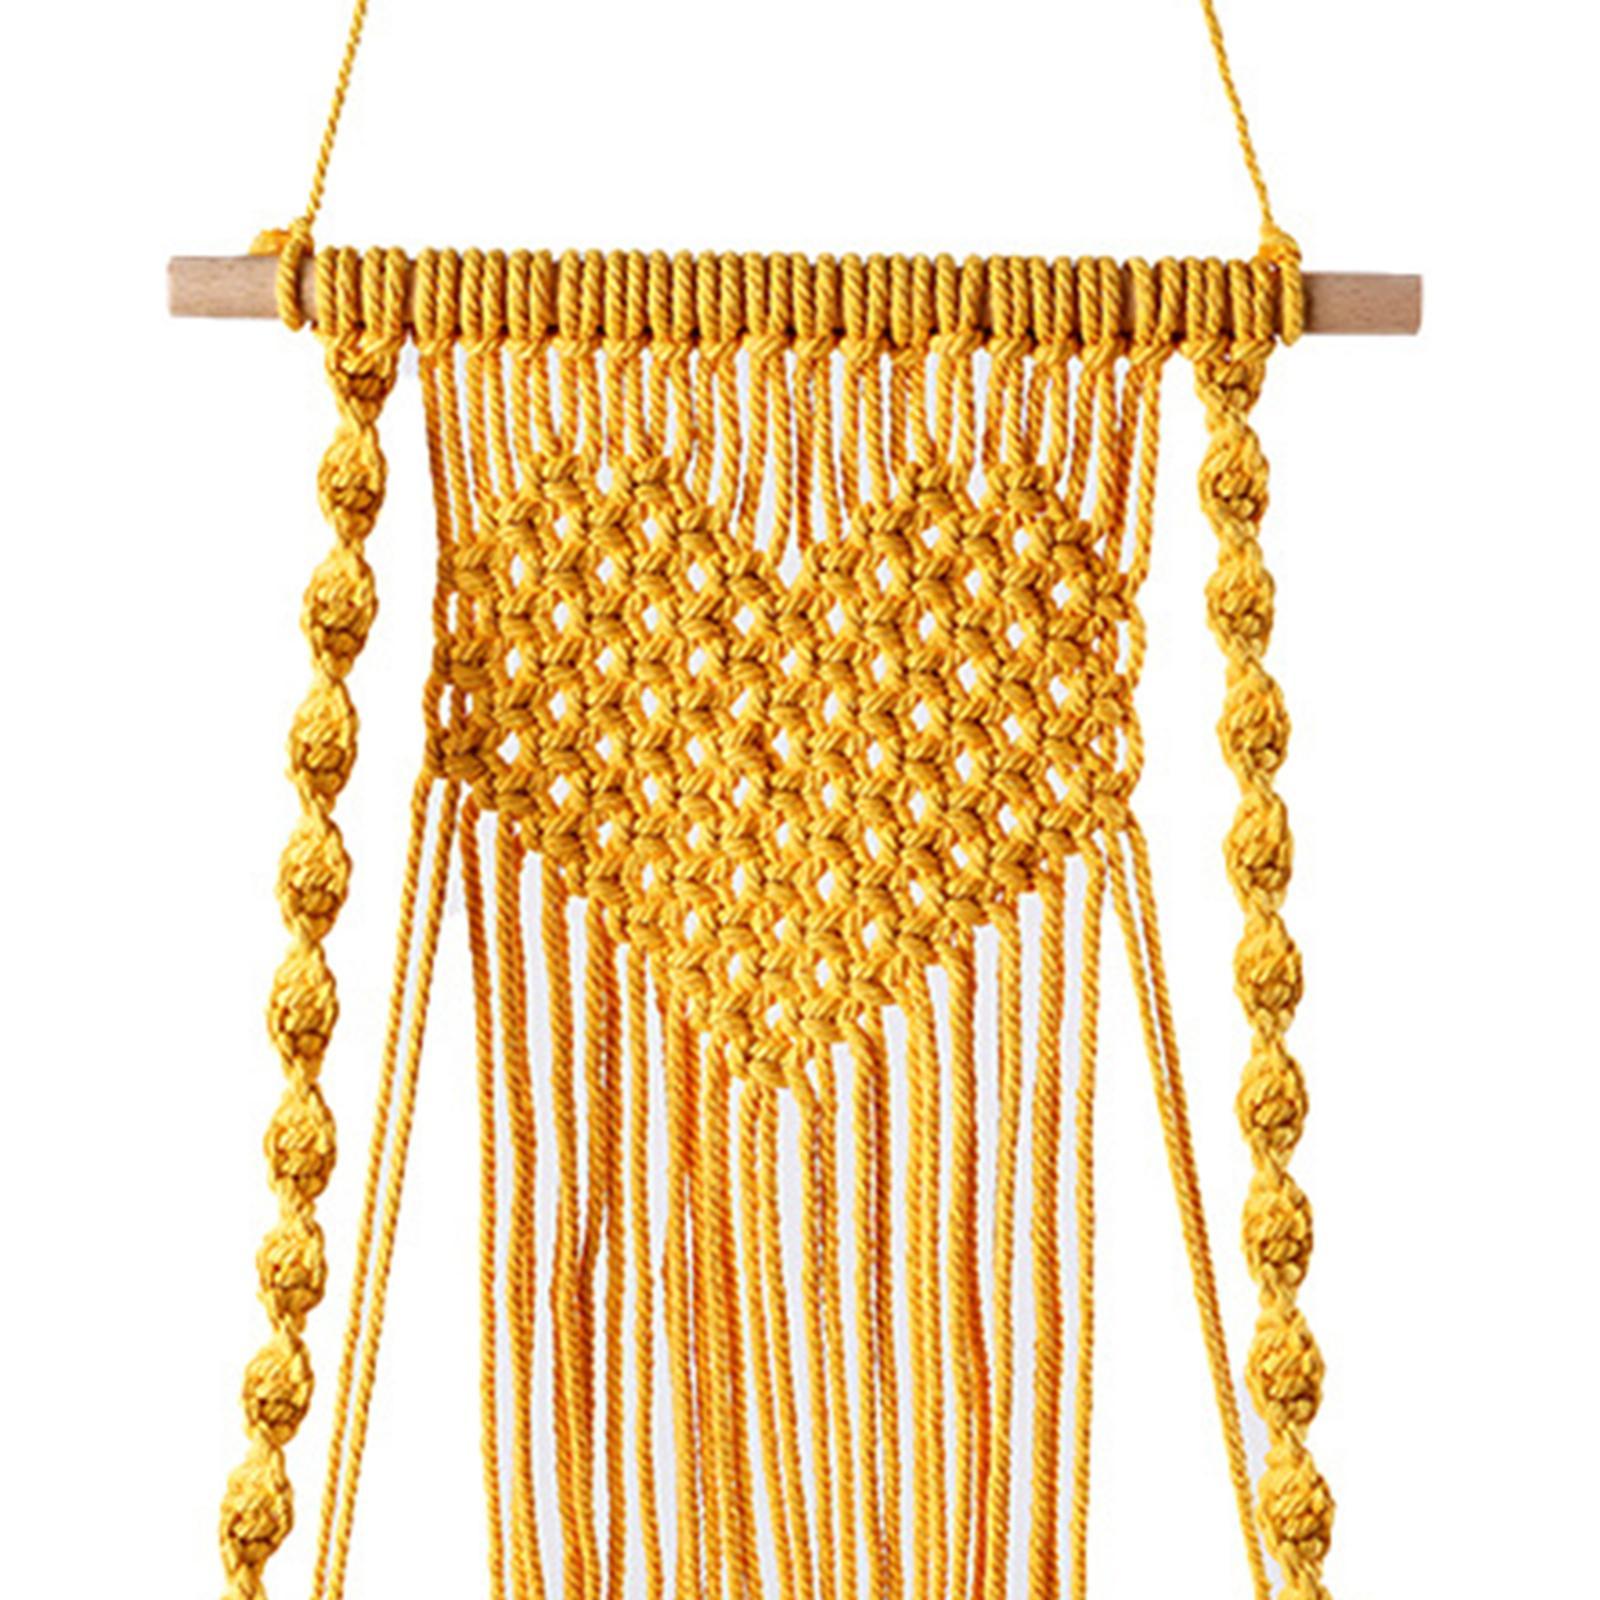 Macrame Wall Hanging Shelf Basket Hanger Holder Boho Woven Rope for Home